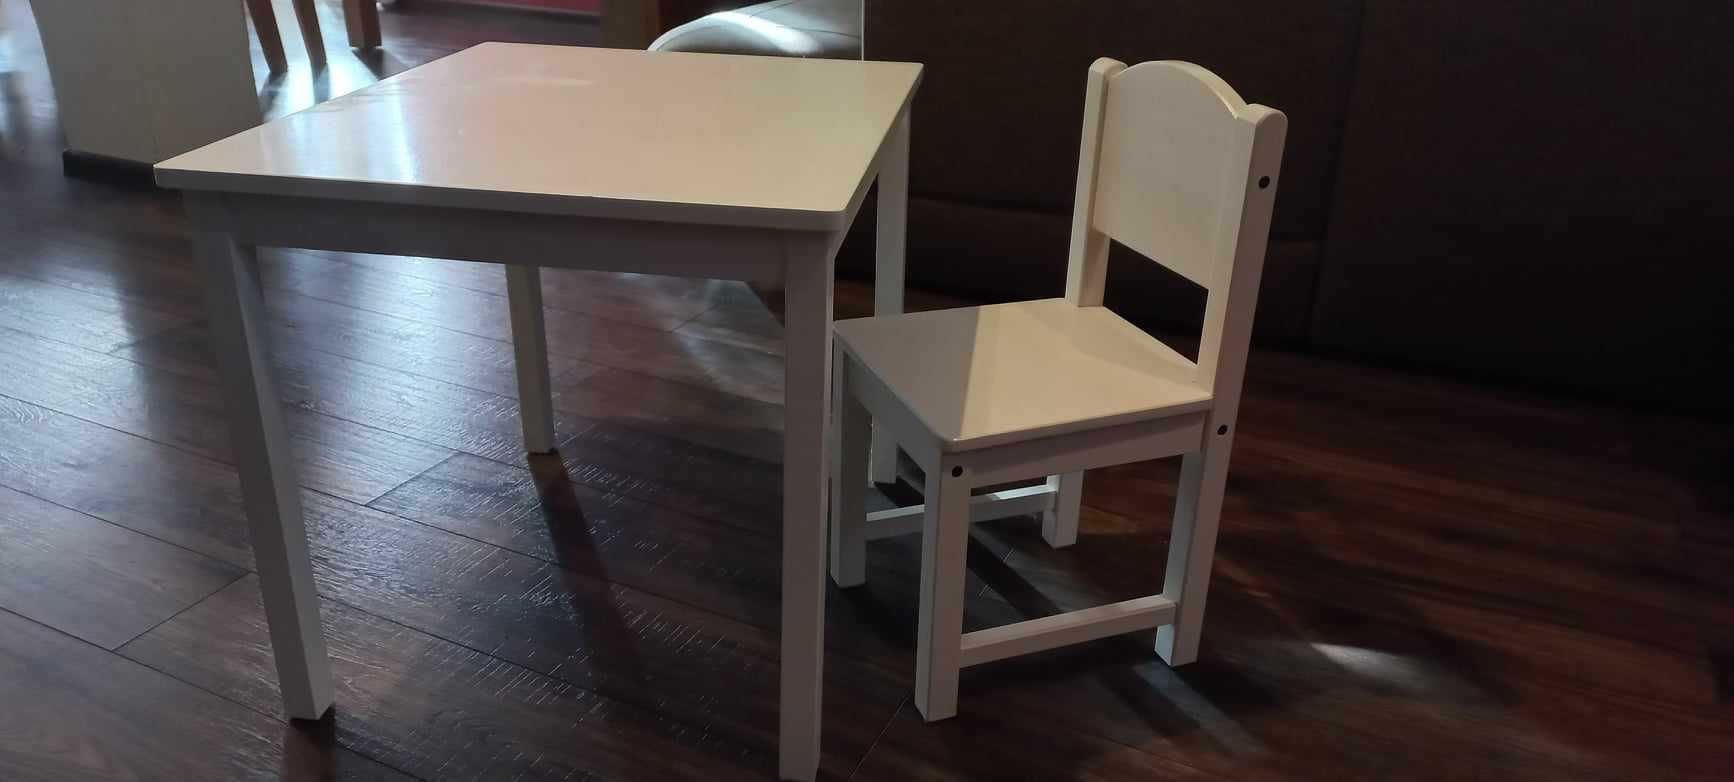 stolik + krzesełko